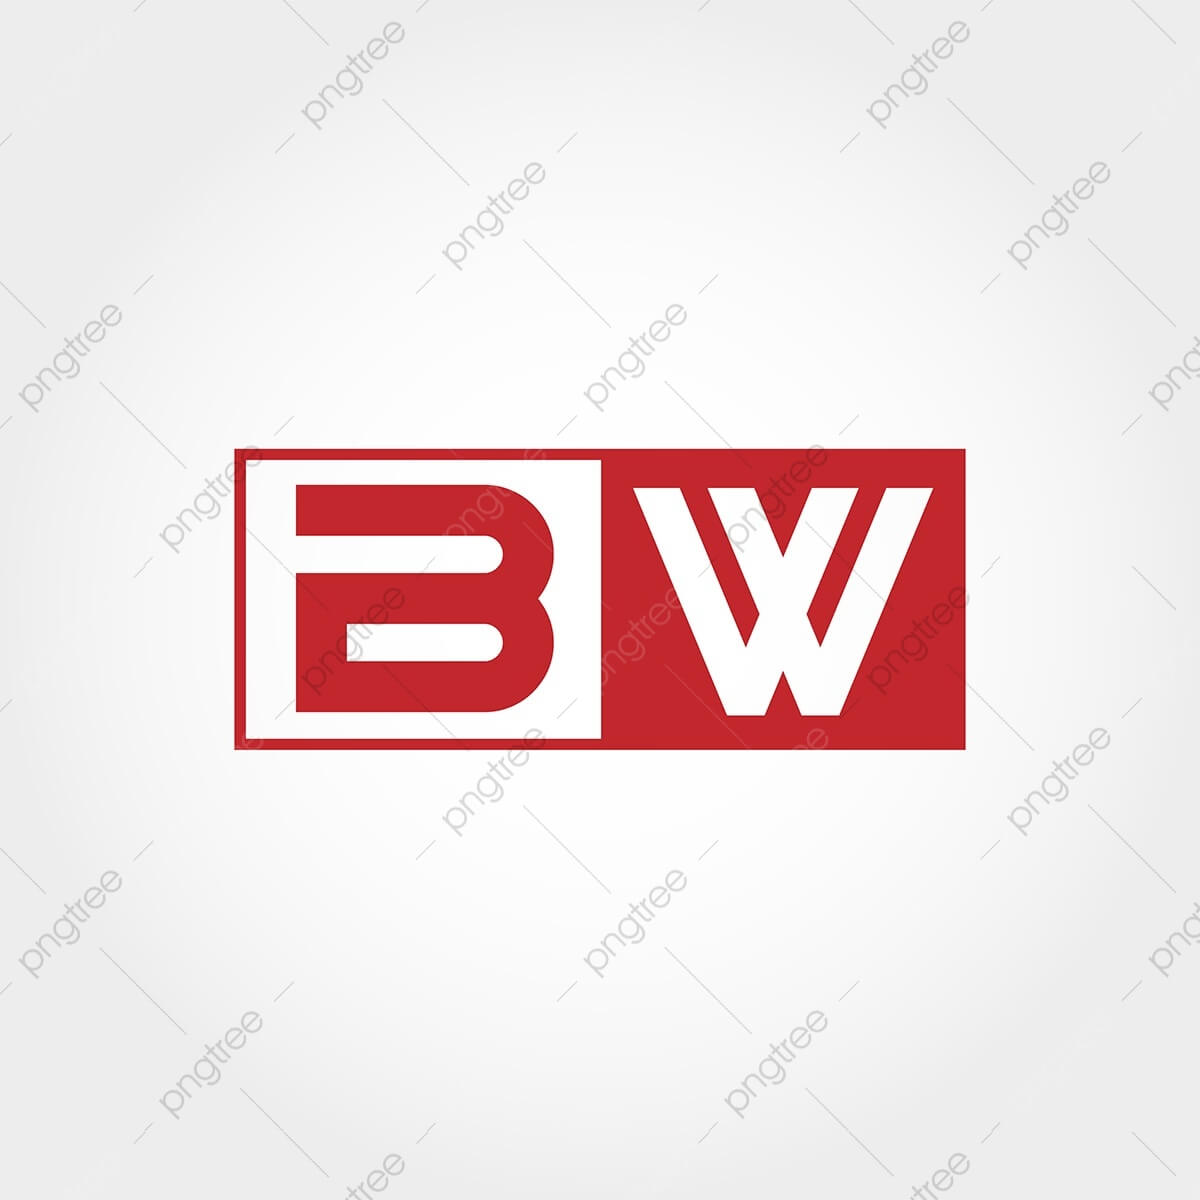 pngtree-initial-letter-bw-logo-design-png-image_3579841.jpg